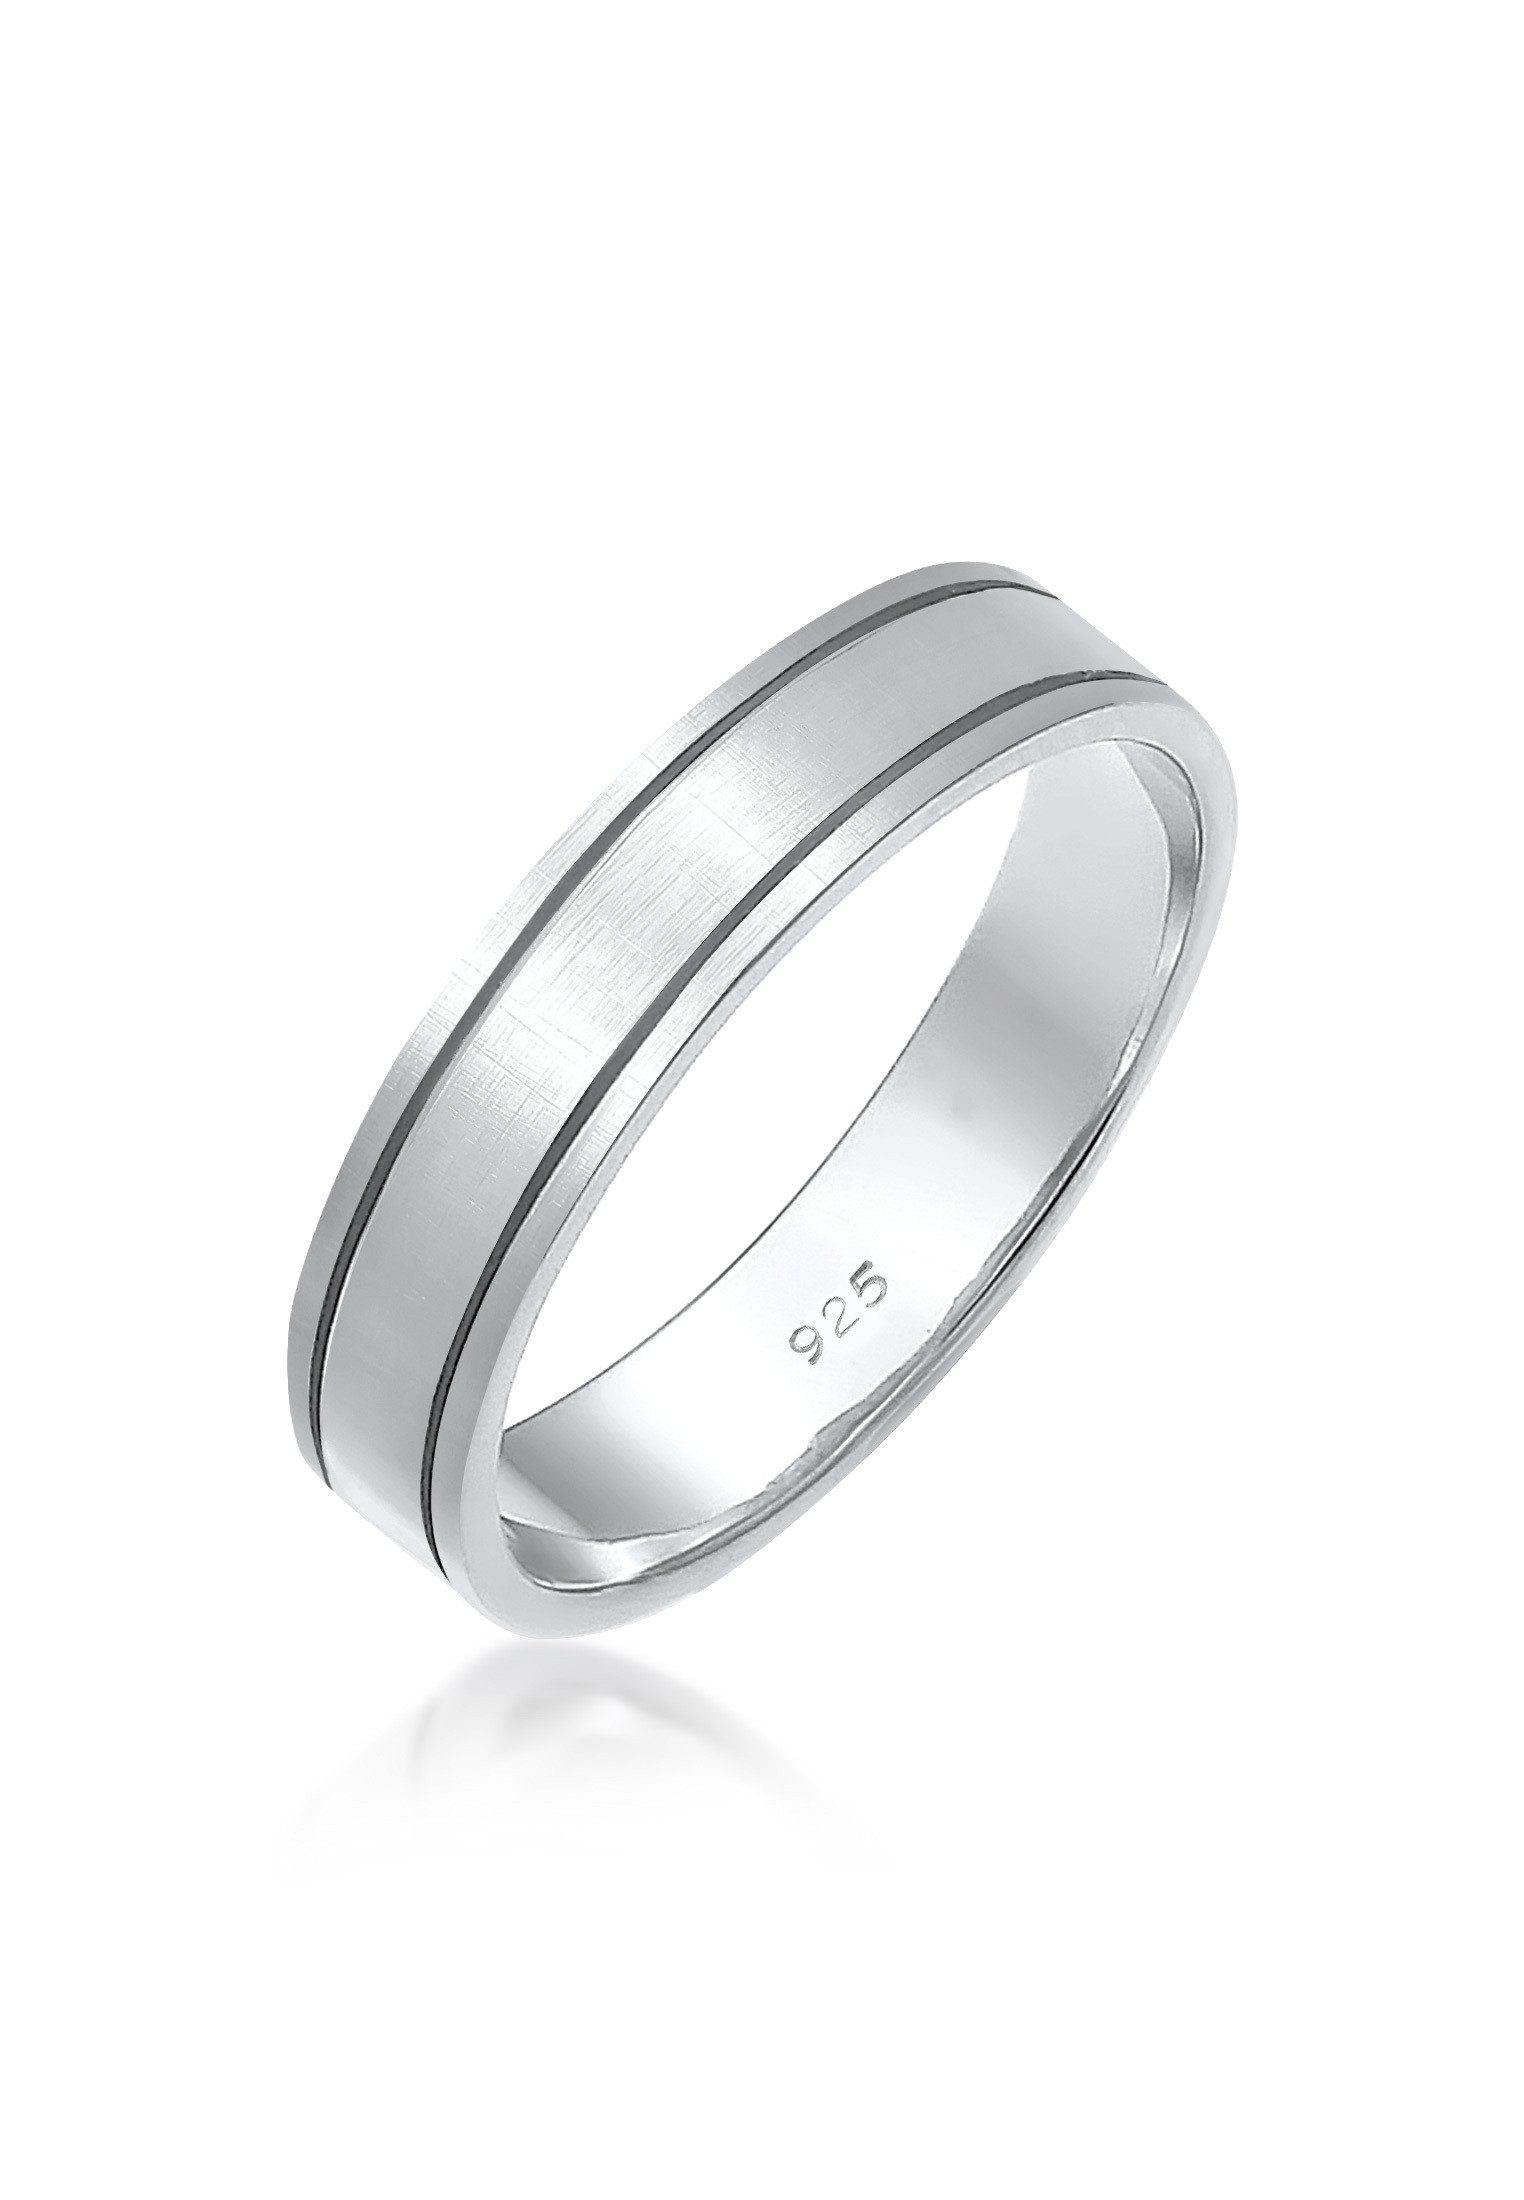 Elli Premium Partnerring Paarring Bandring Trauring Hochzeit Ehe 925 Silber